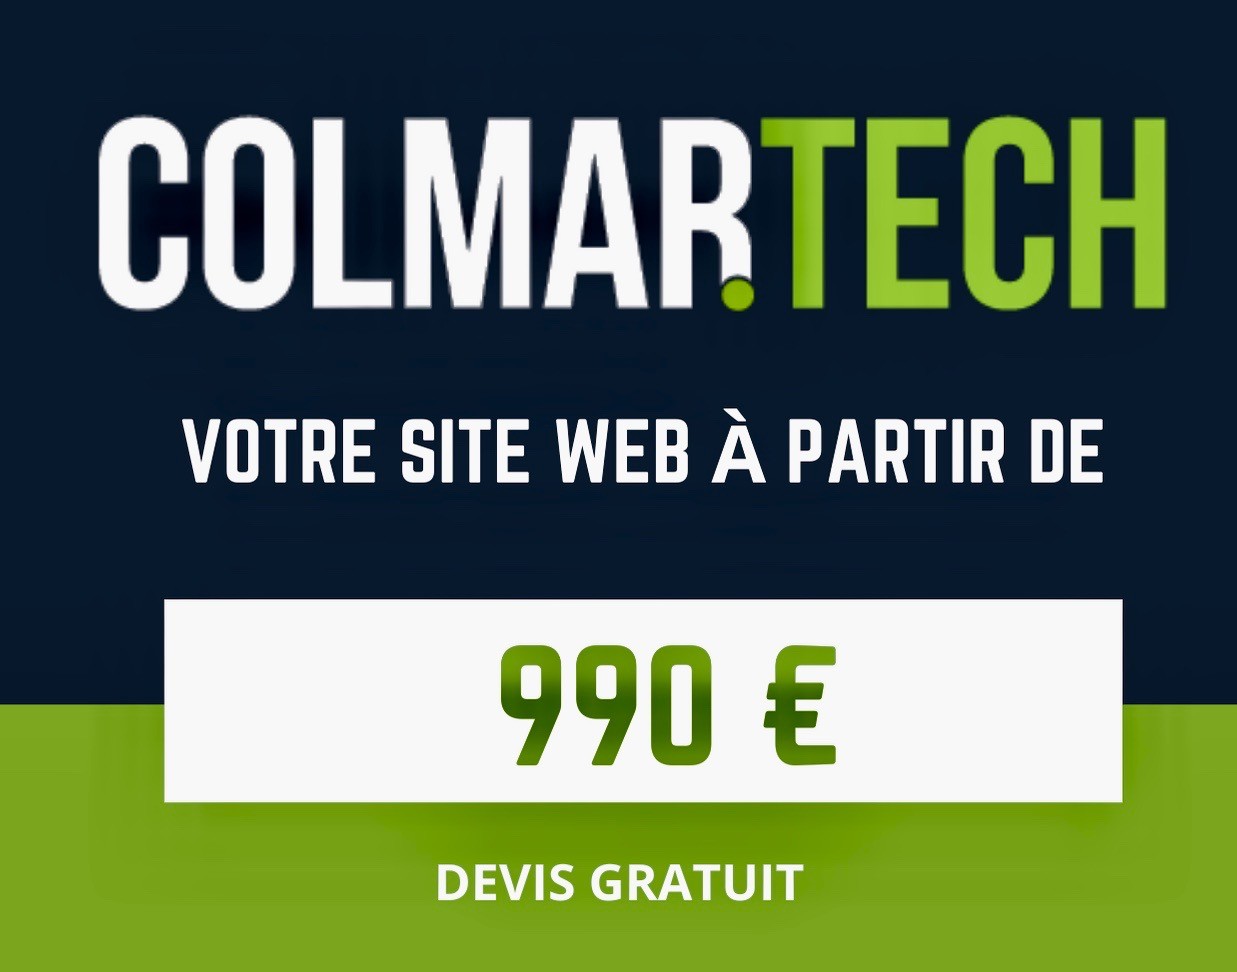 Agence Colmar